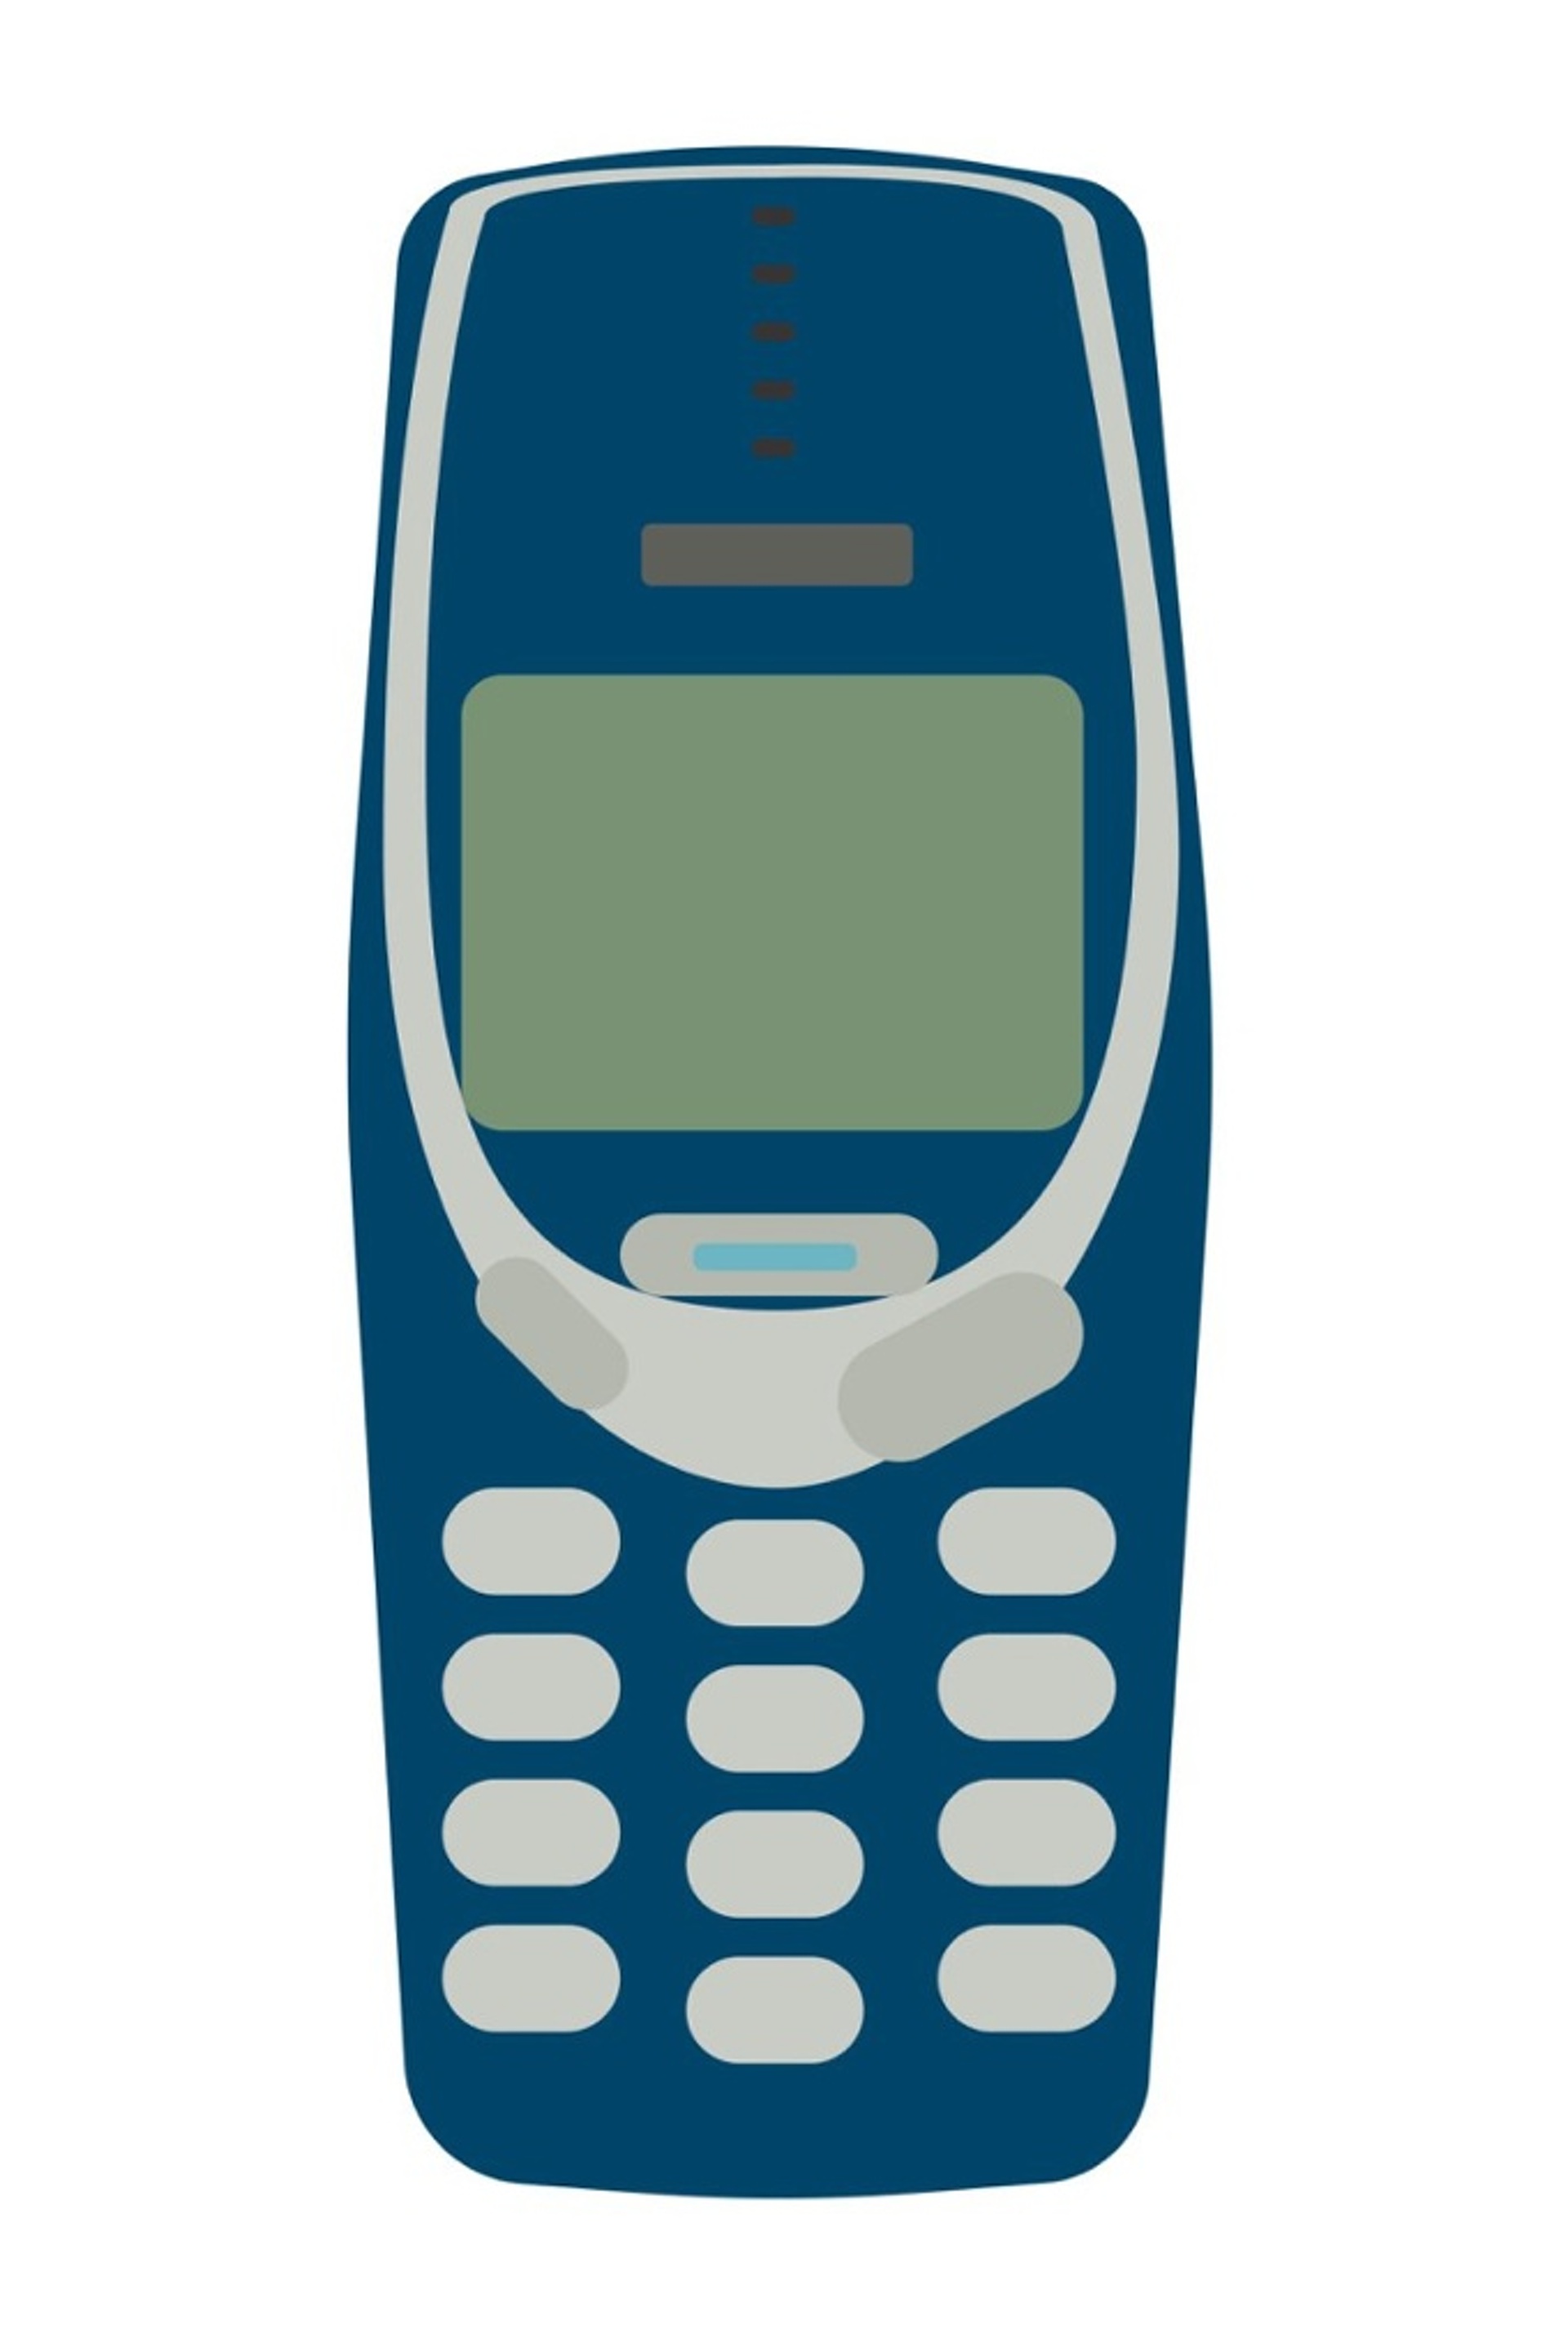 Nokia 3310 Финляндия